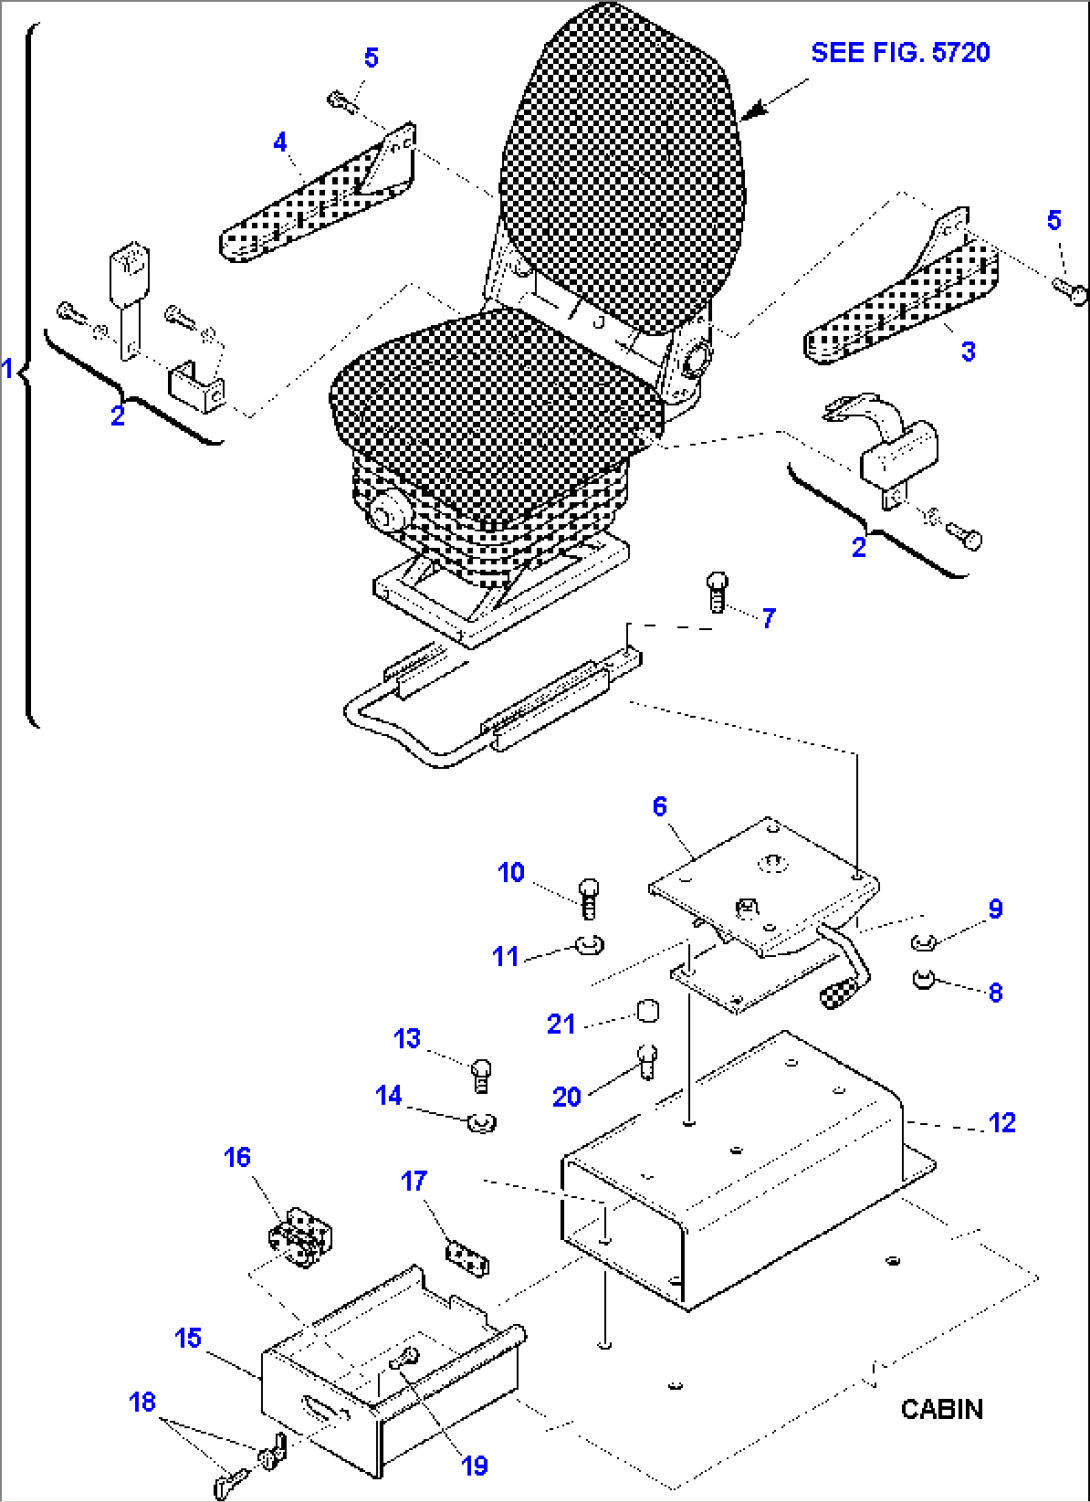 OPERATOR’S SEAT (OPTIONAL) (1/2)